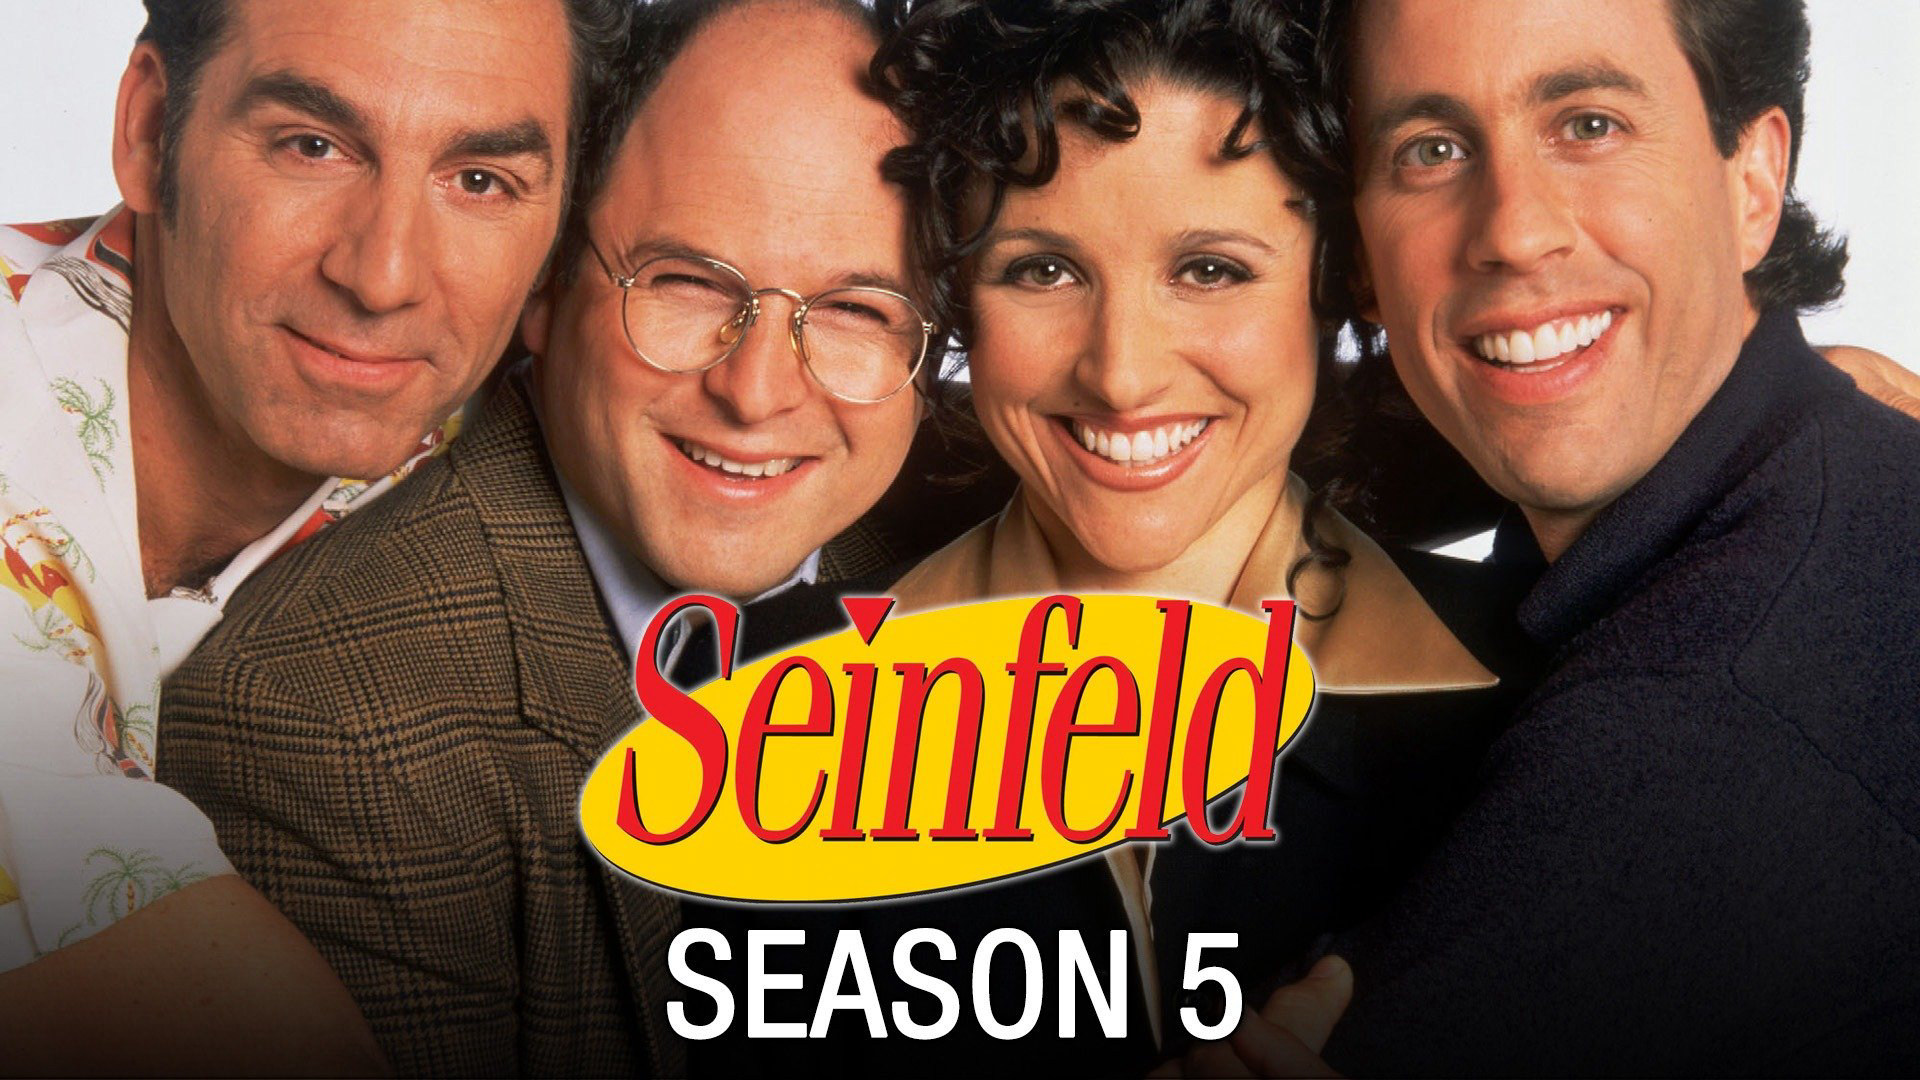 Seinfeld (Phần 5) - Seinfeld (Season 5) (1993)